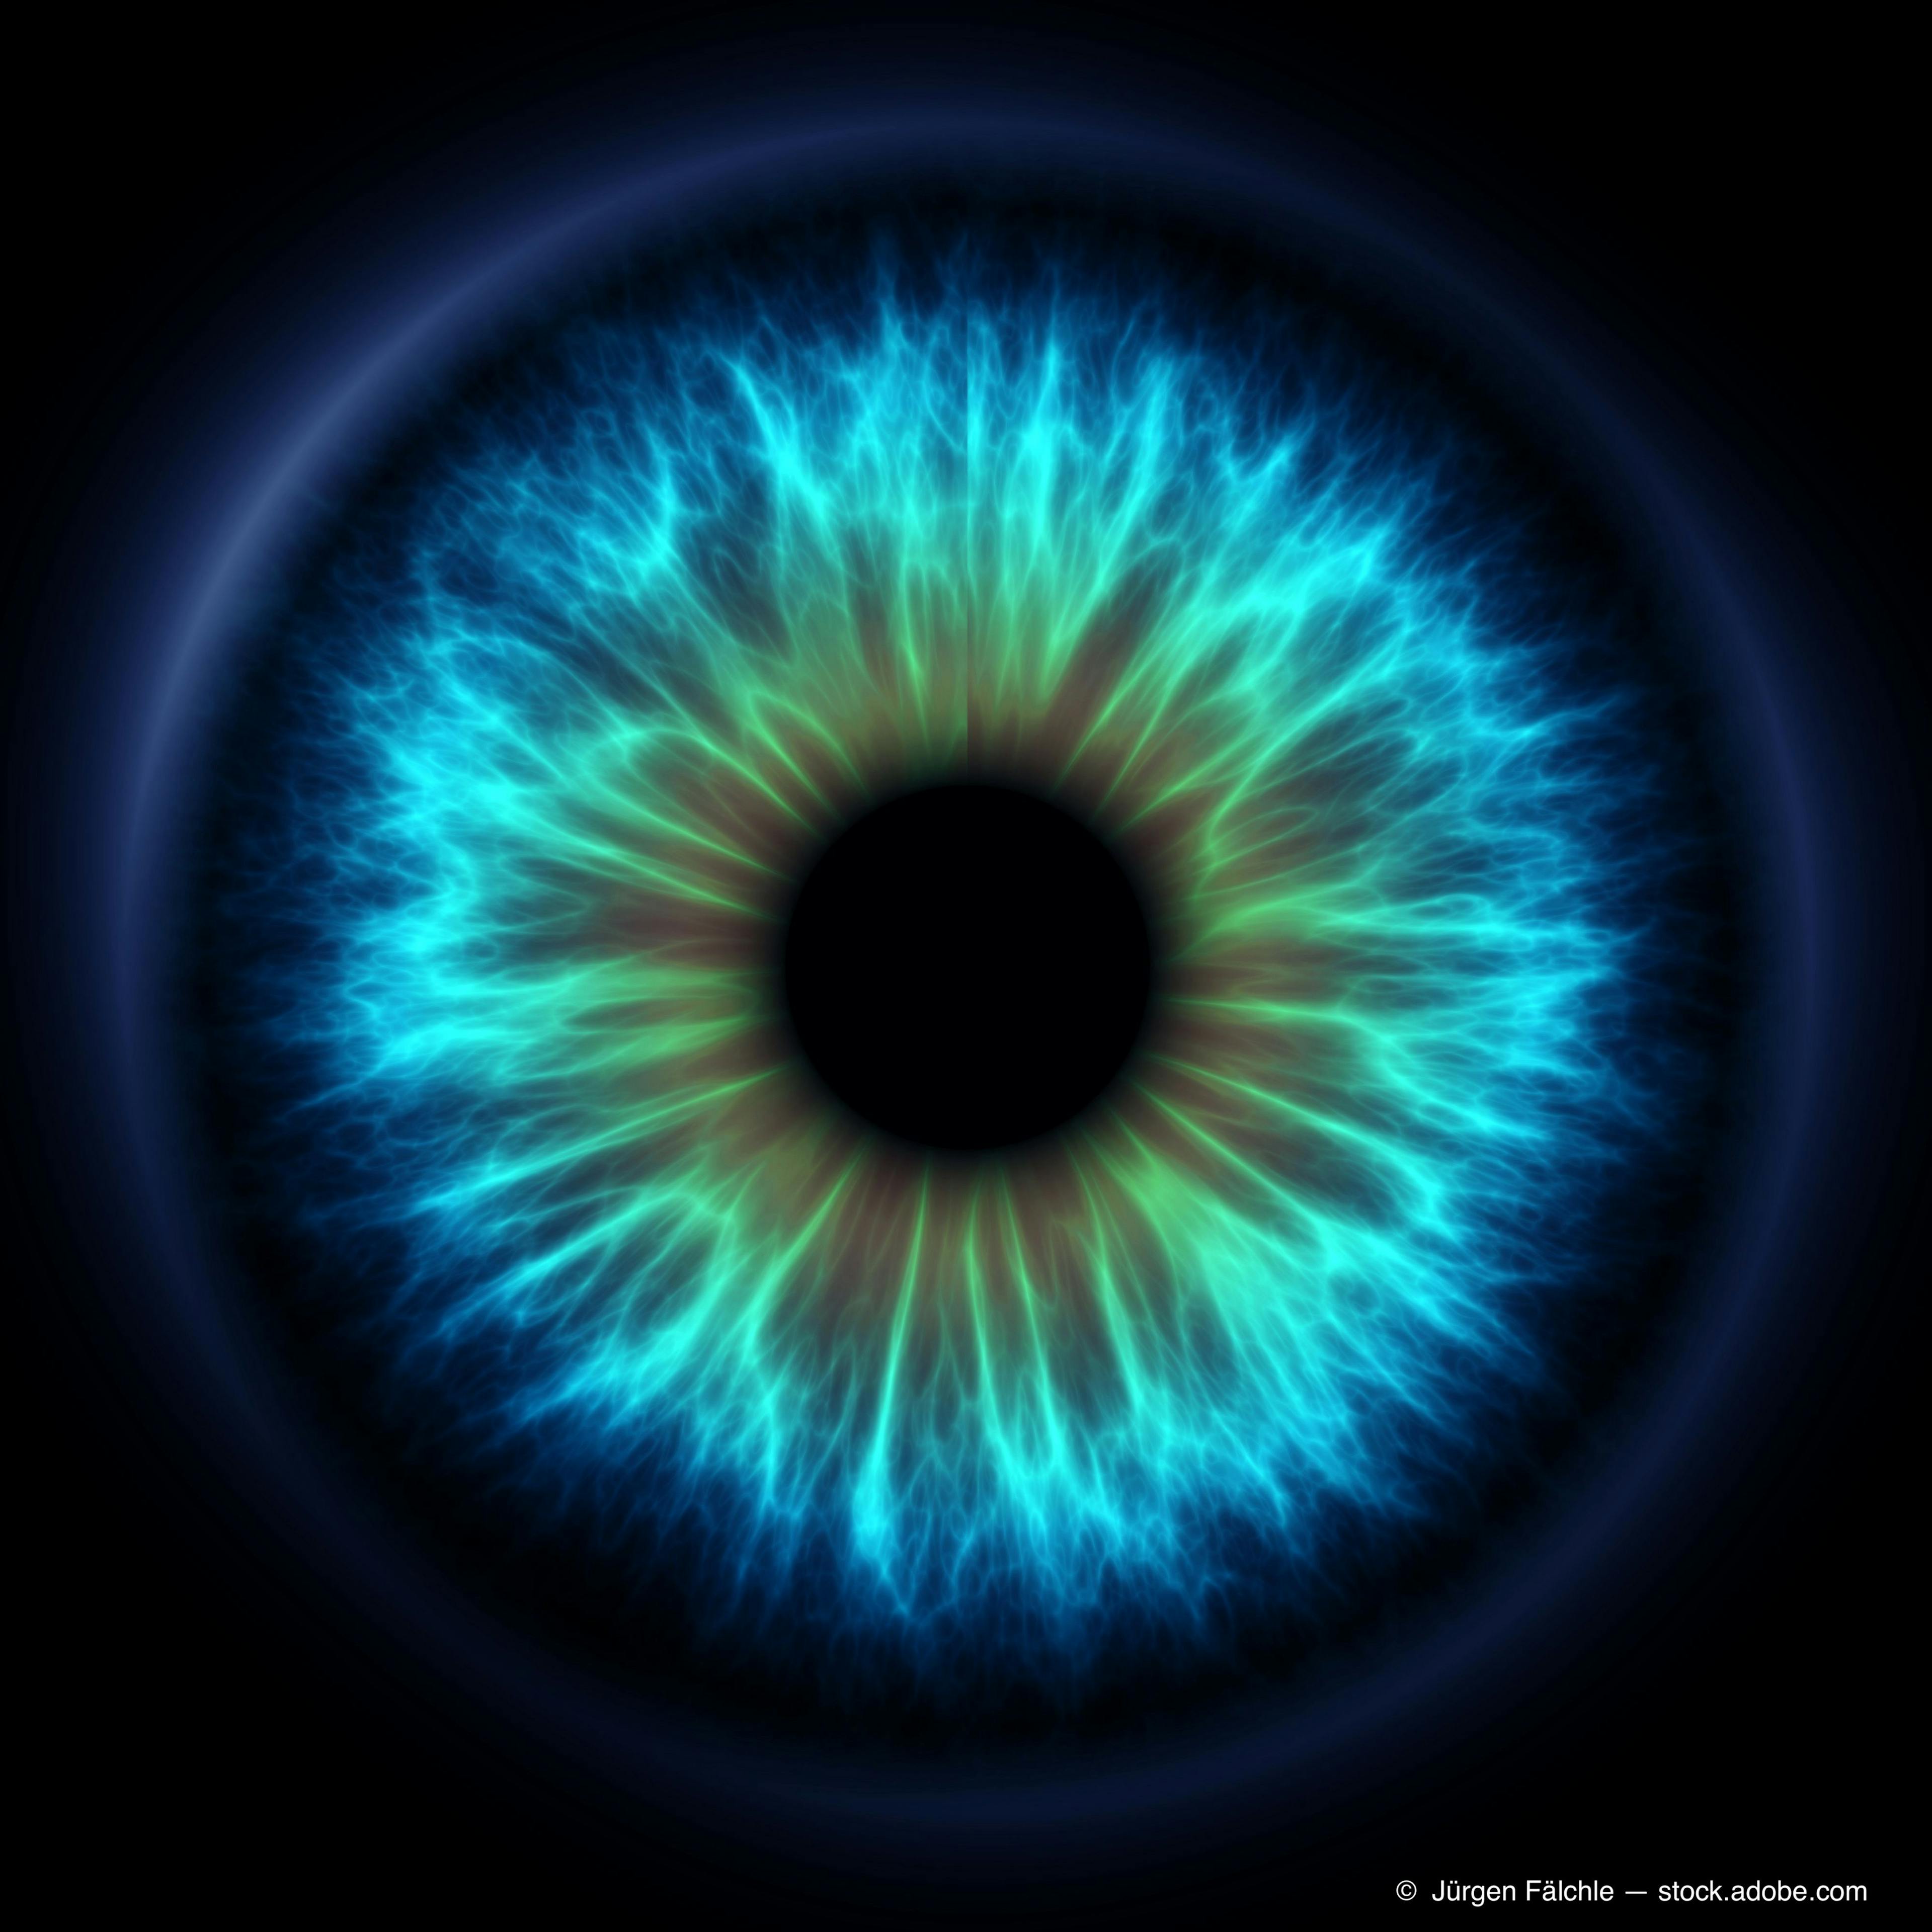 Exploring four decades of change in retina